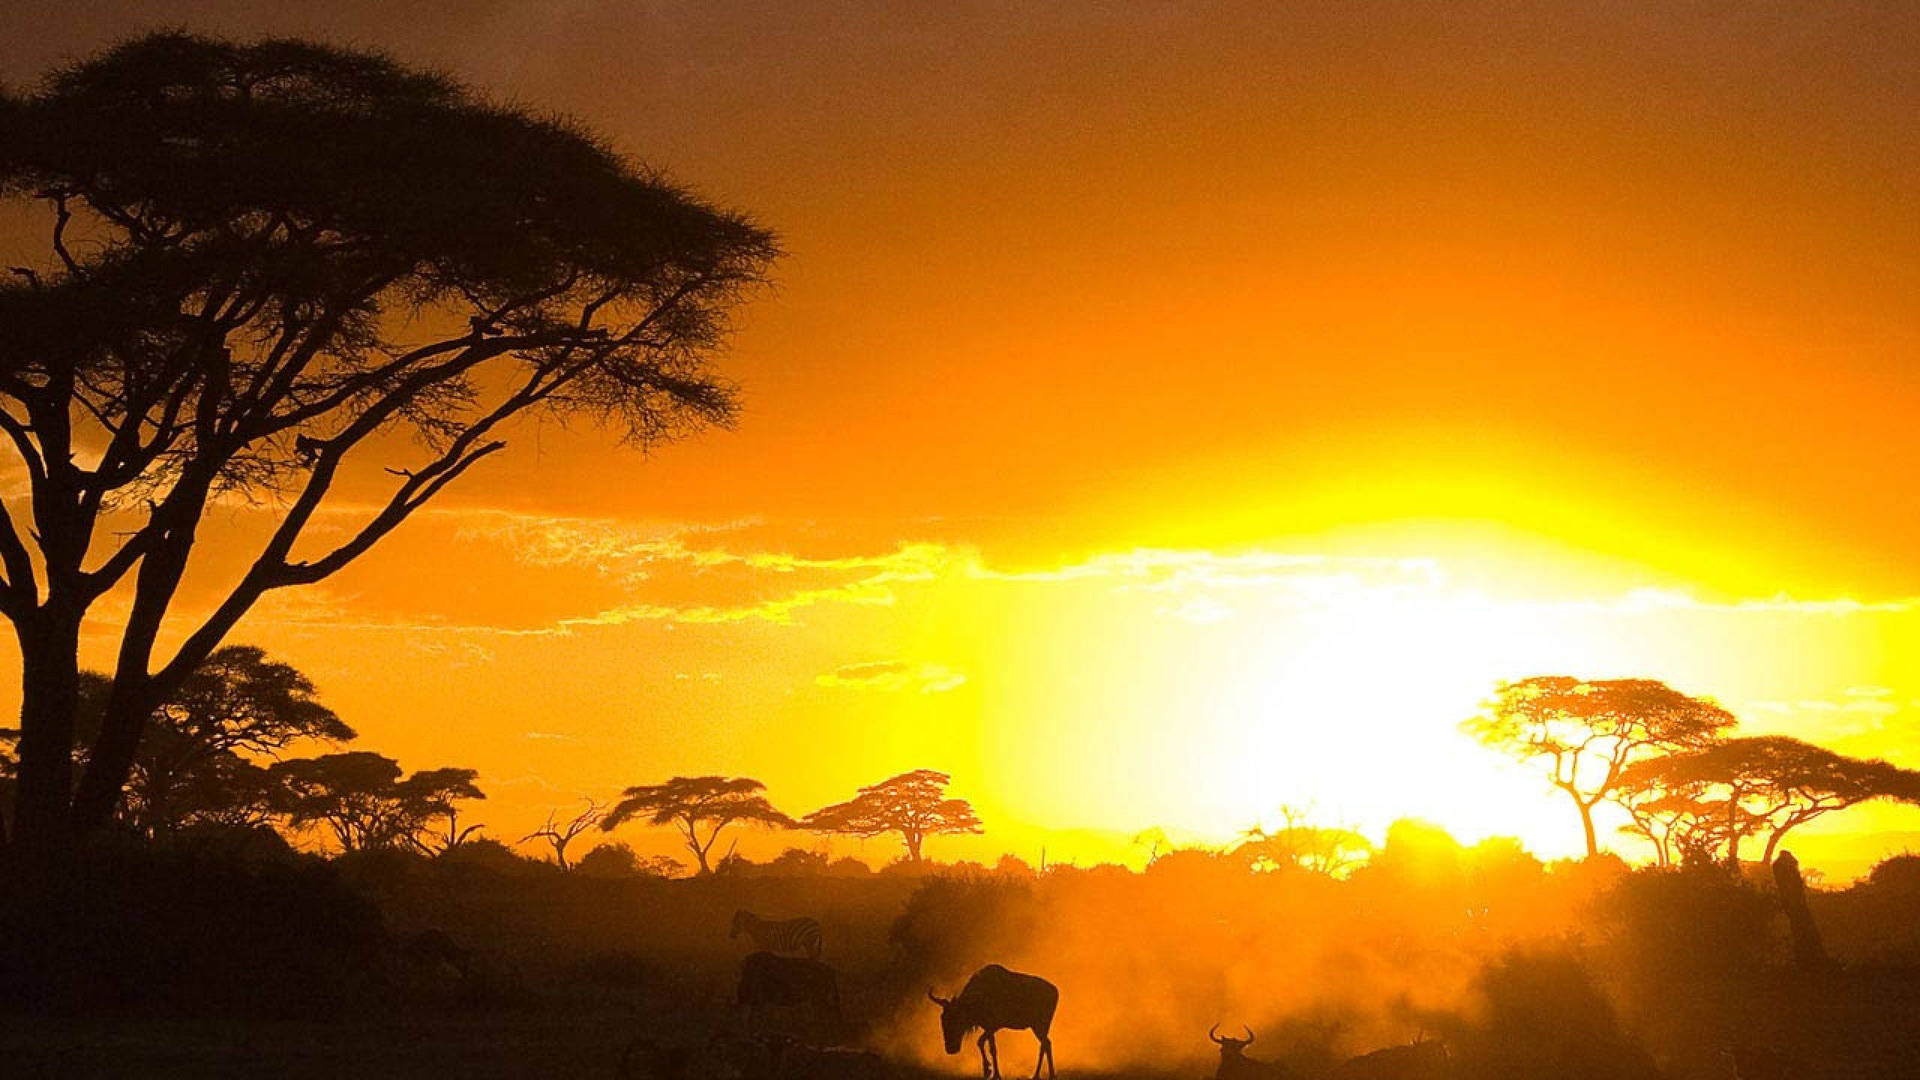 Nature And Wildlife In Kenya Background